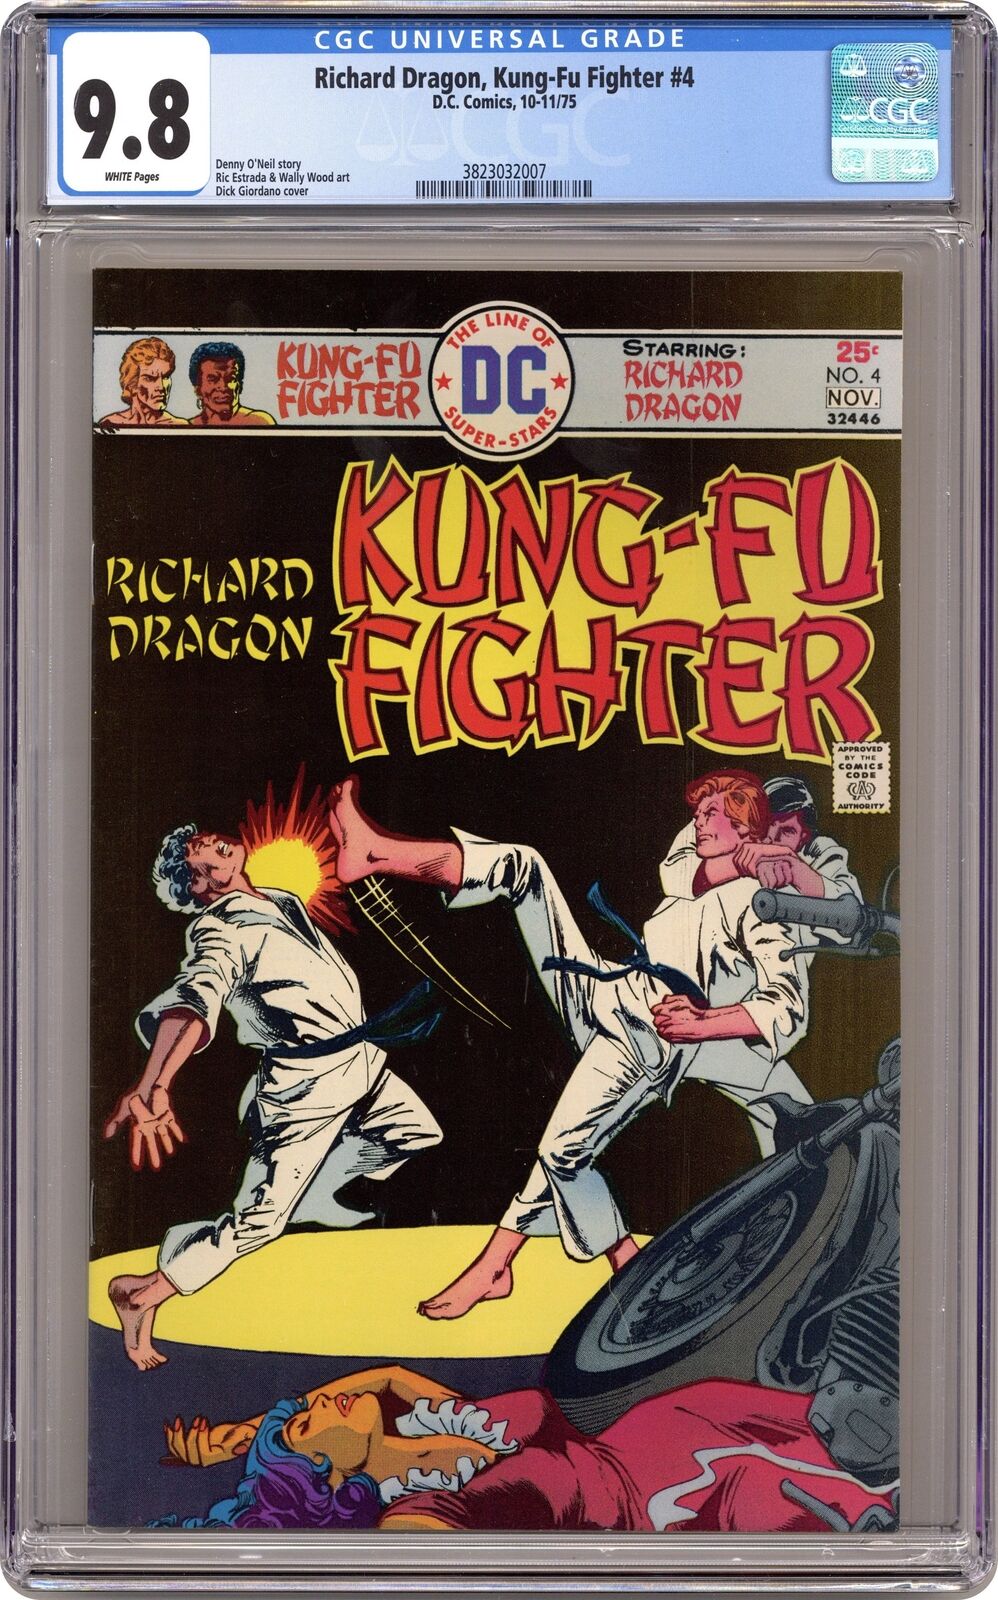 Richard Dragon Kung Fu Fighter #4 CGC 9.8 1975 3823032007